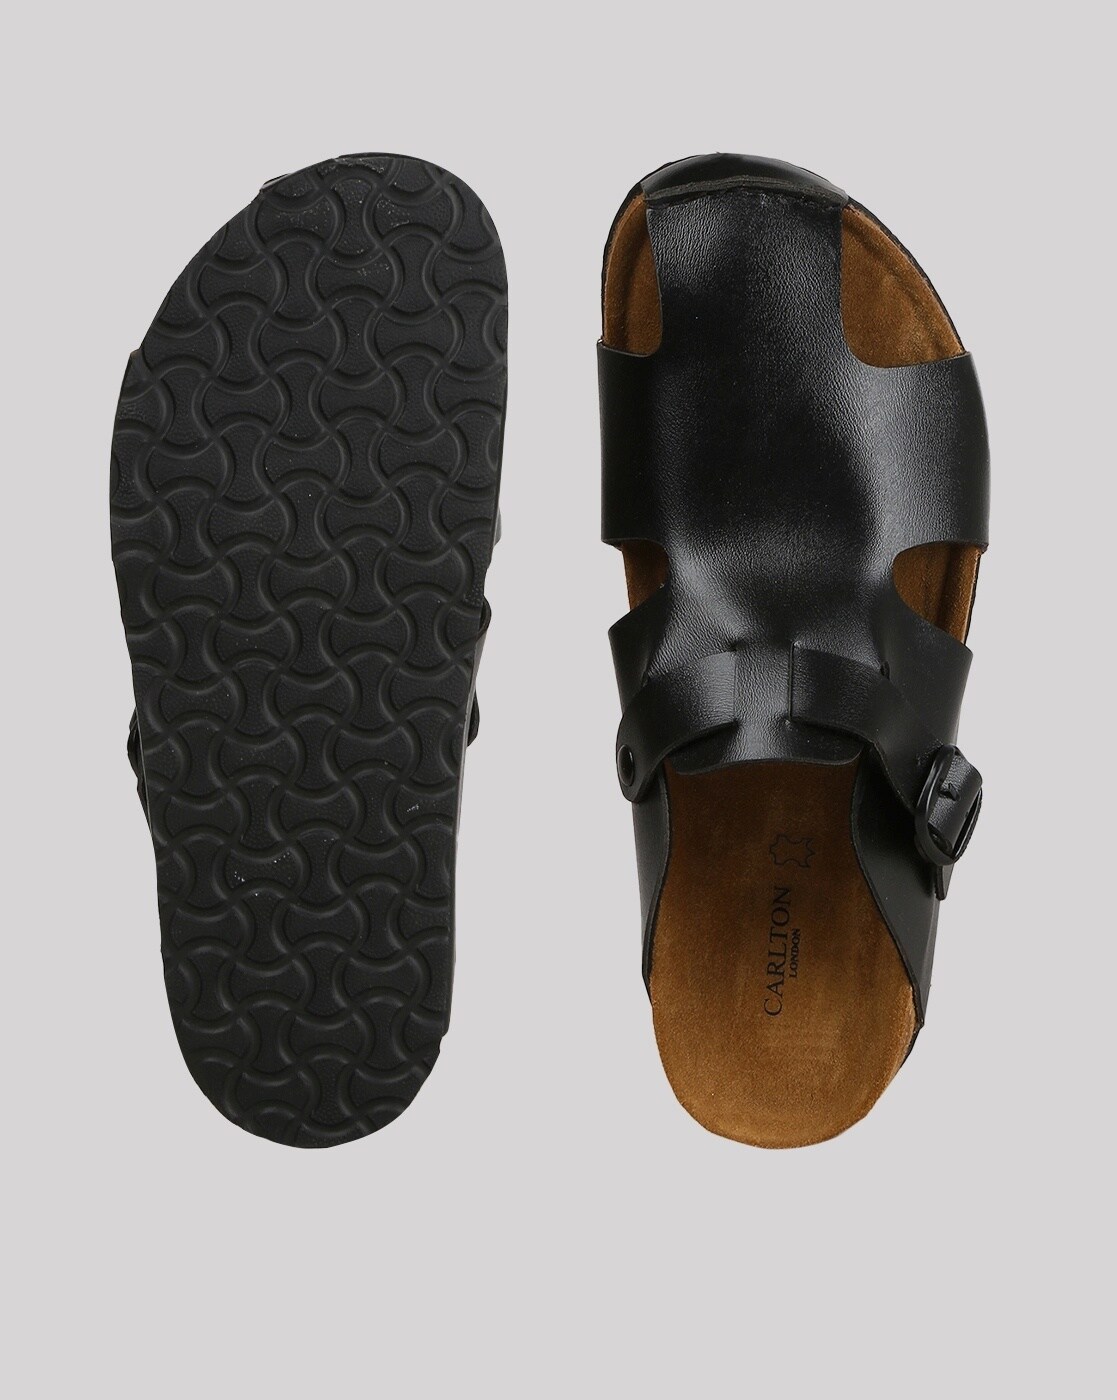 Buy Black Sandals for Men by Carlton London Online